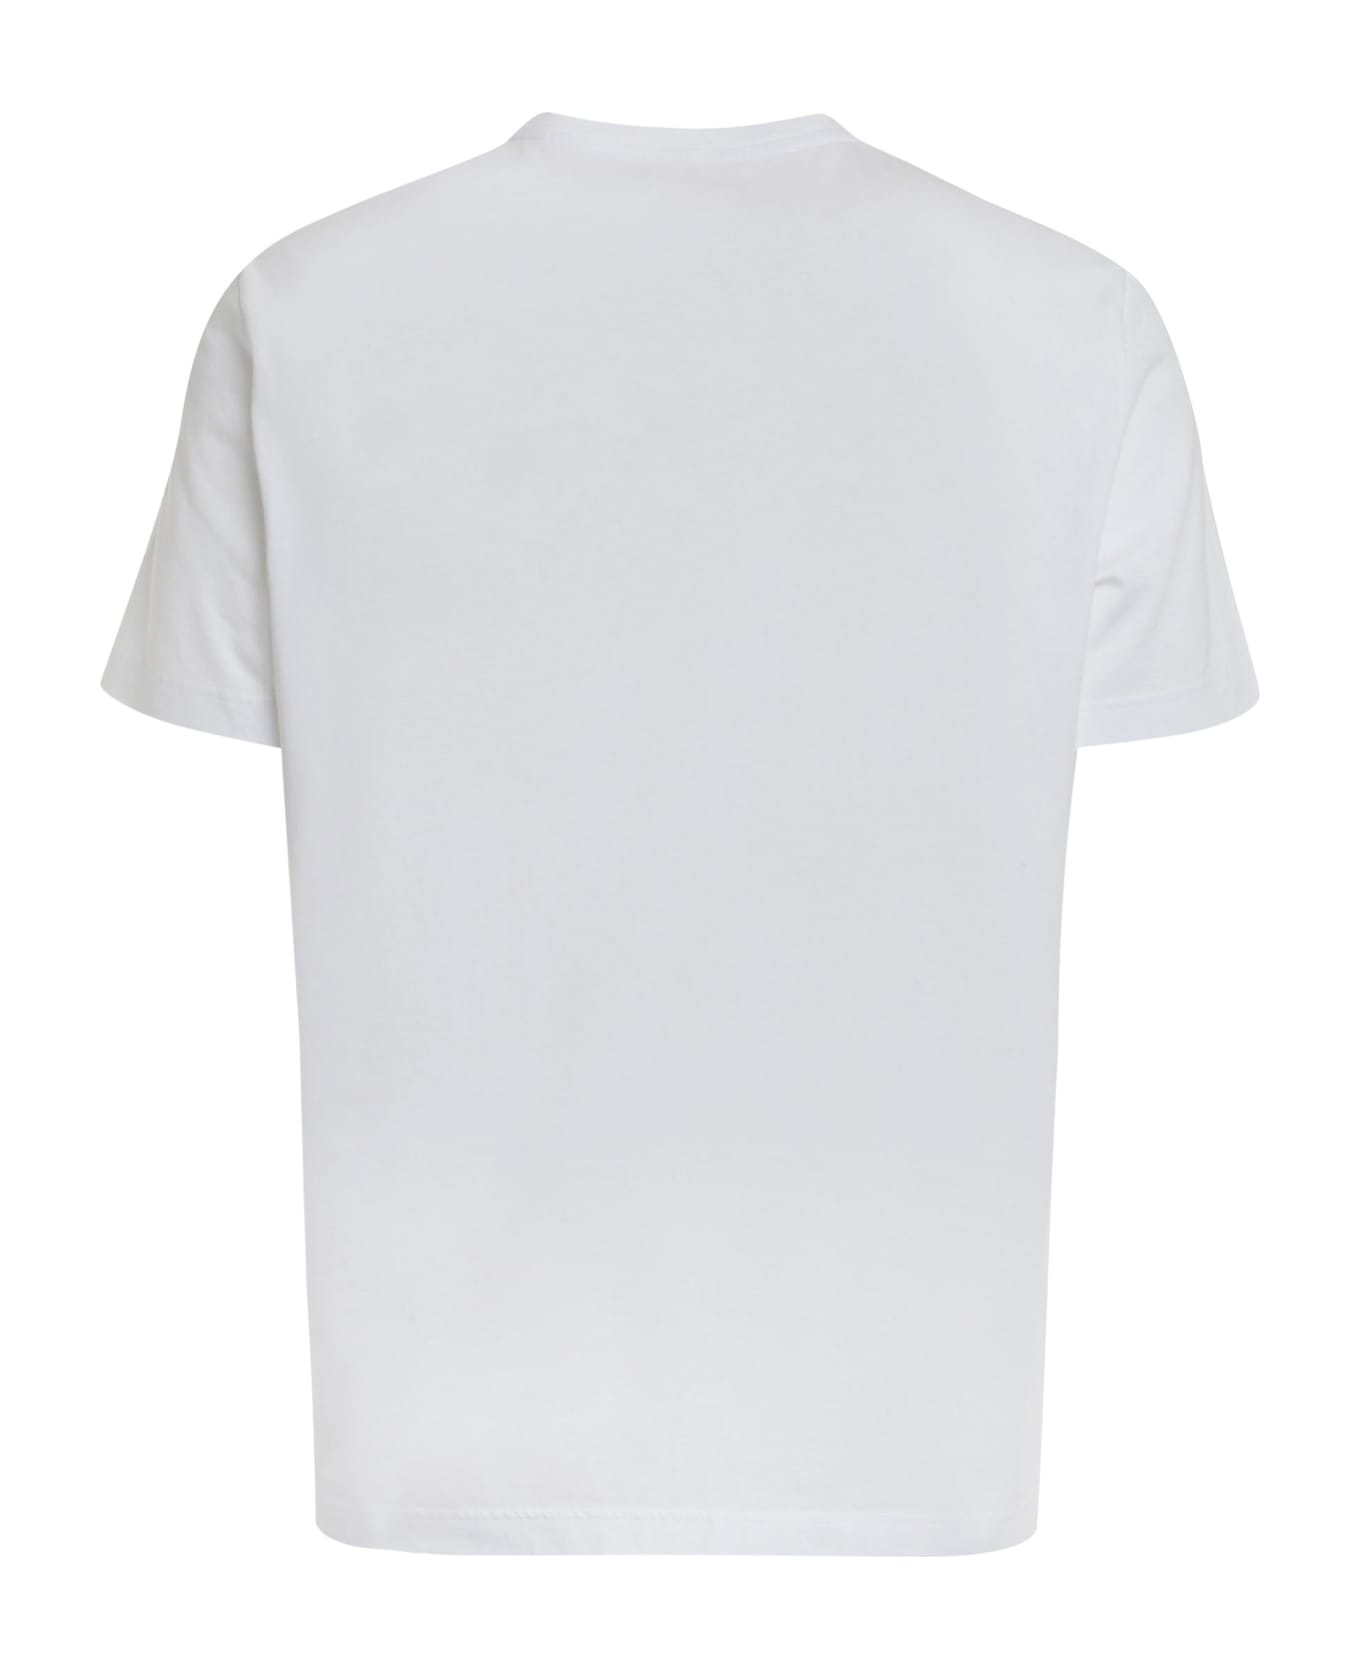 Golden Goose Star T-shirt - Bianco シャツ